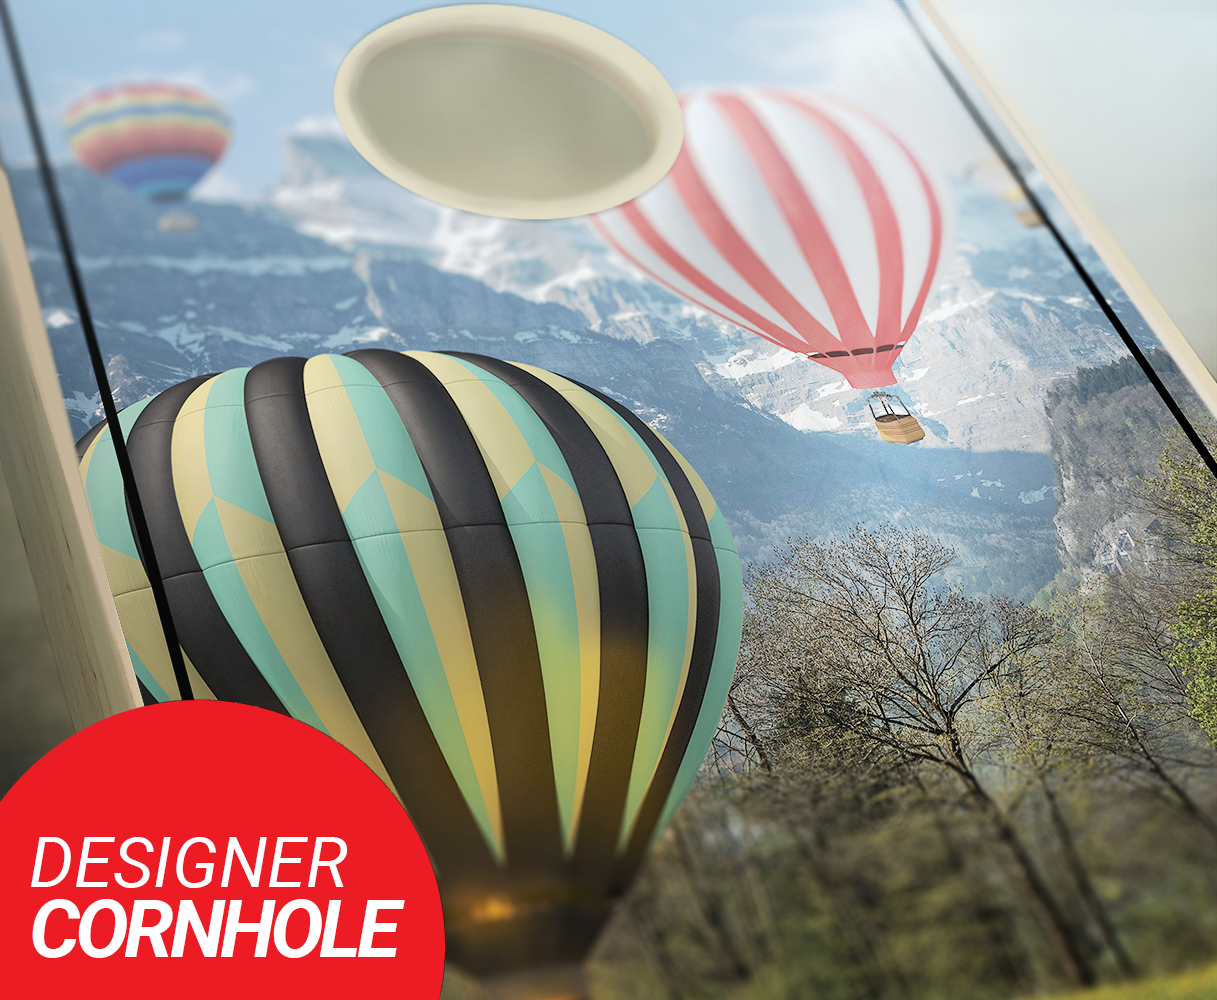 Hot Air Balloon Cornhole Set